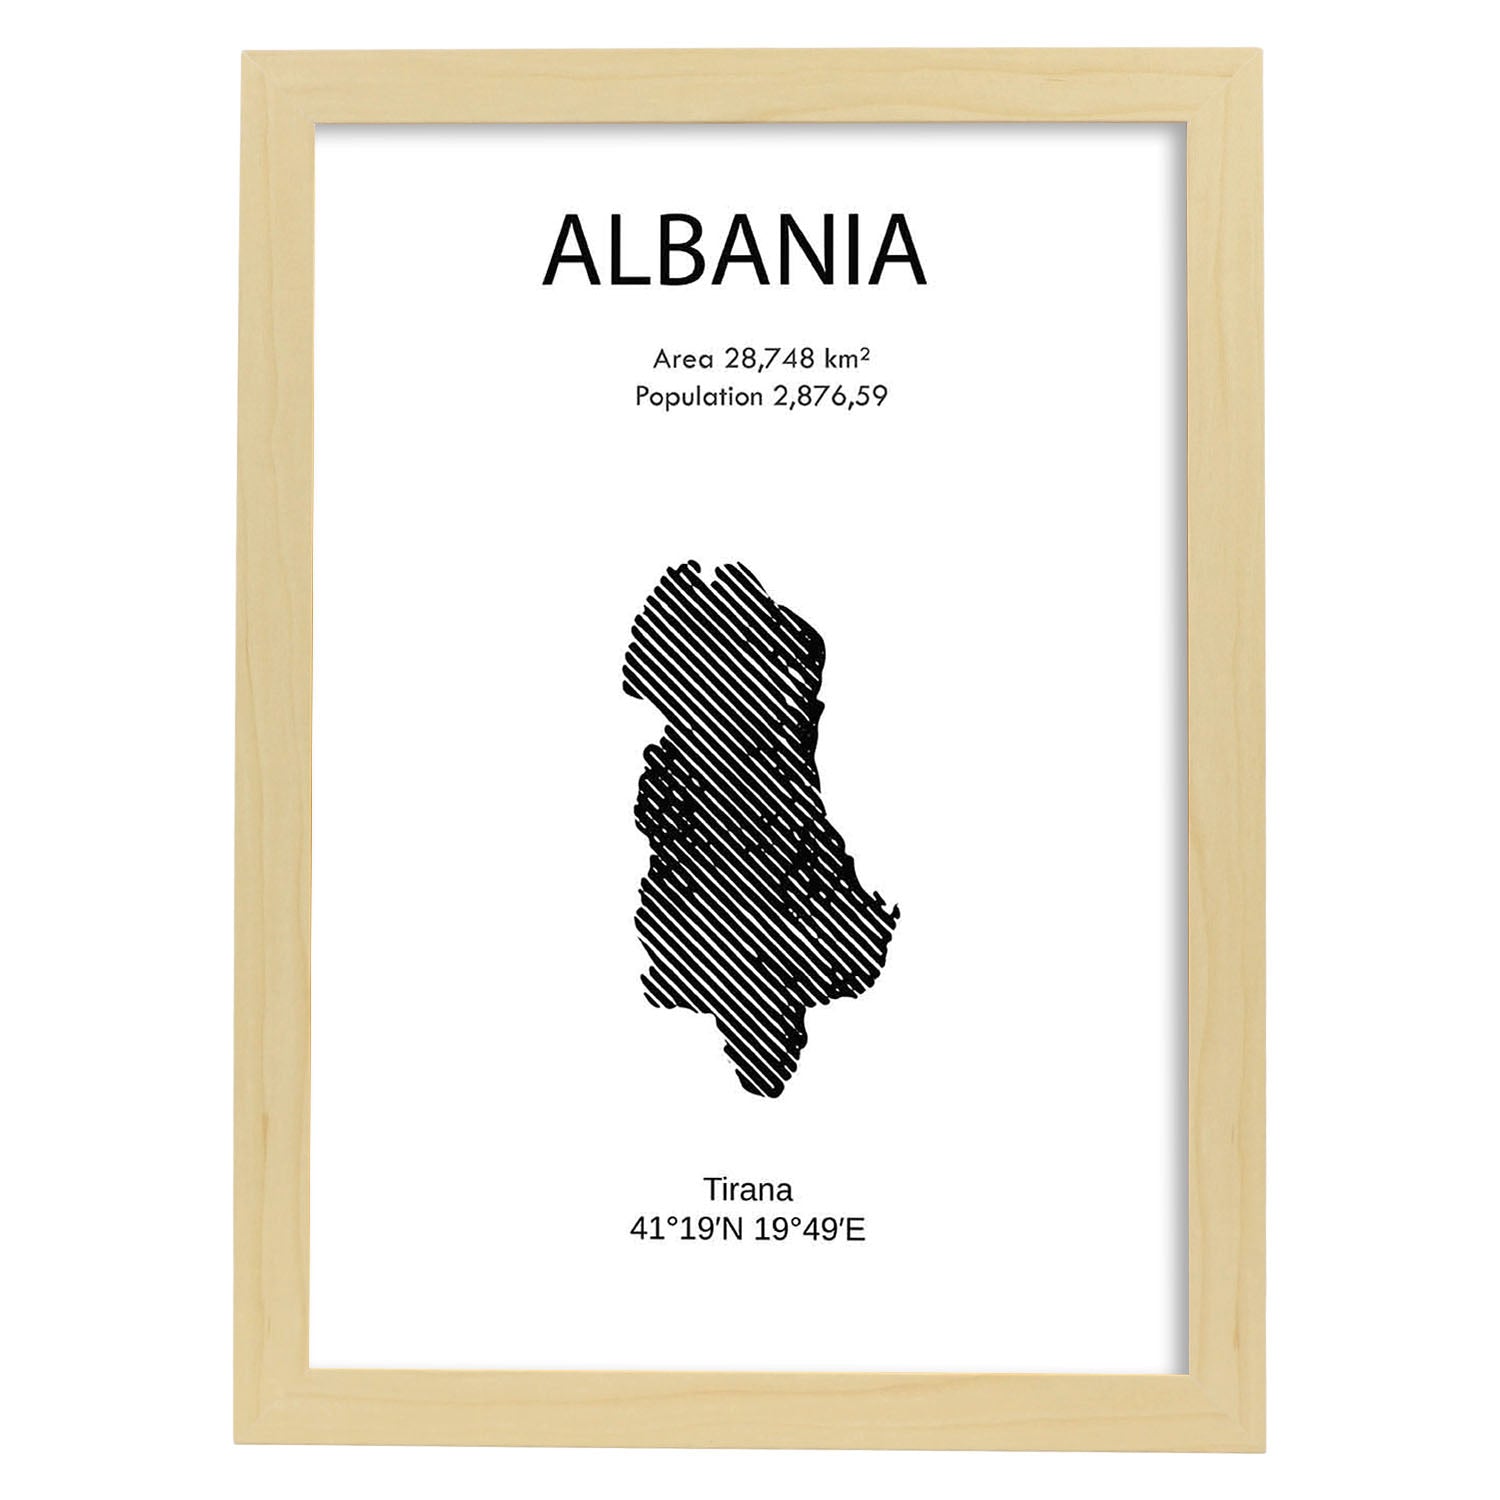 Poster de Albania. Láminas de paises y continentes del mundo.-Artwork-Nacnic-A4-Marco Madera clara-Nacnic Estudio SL